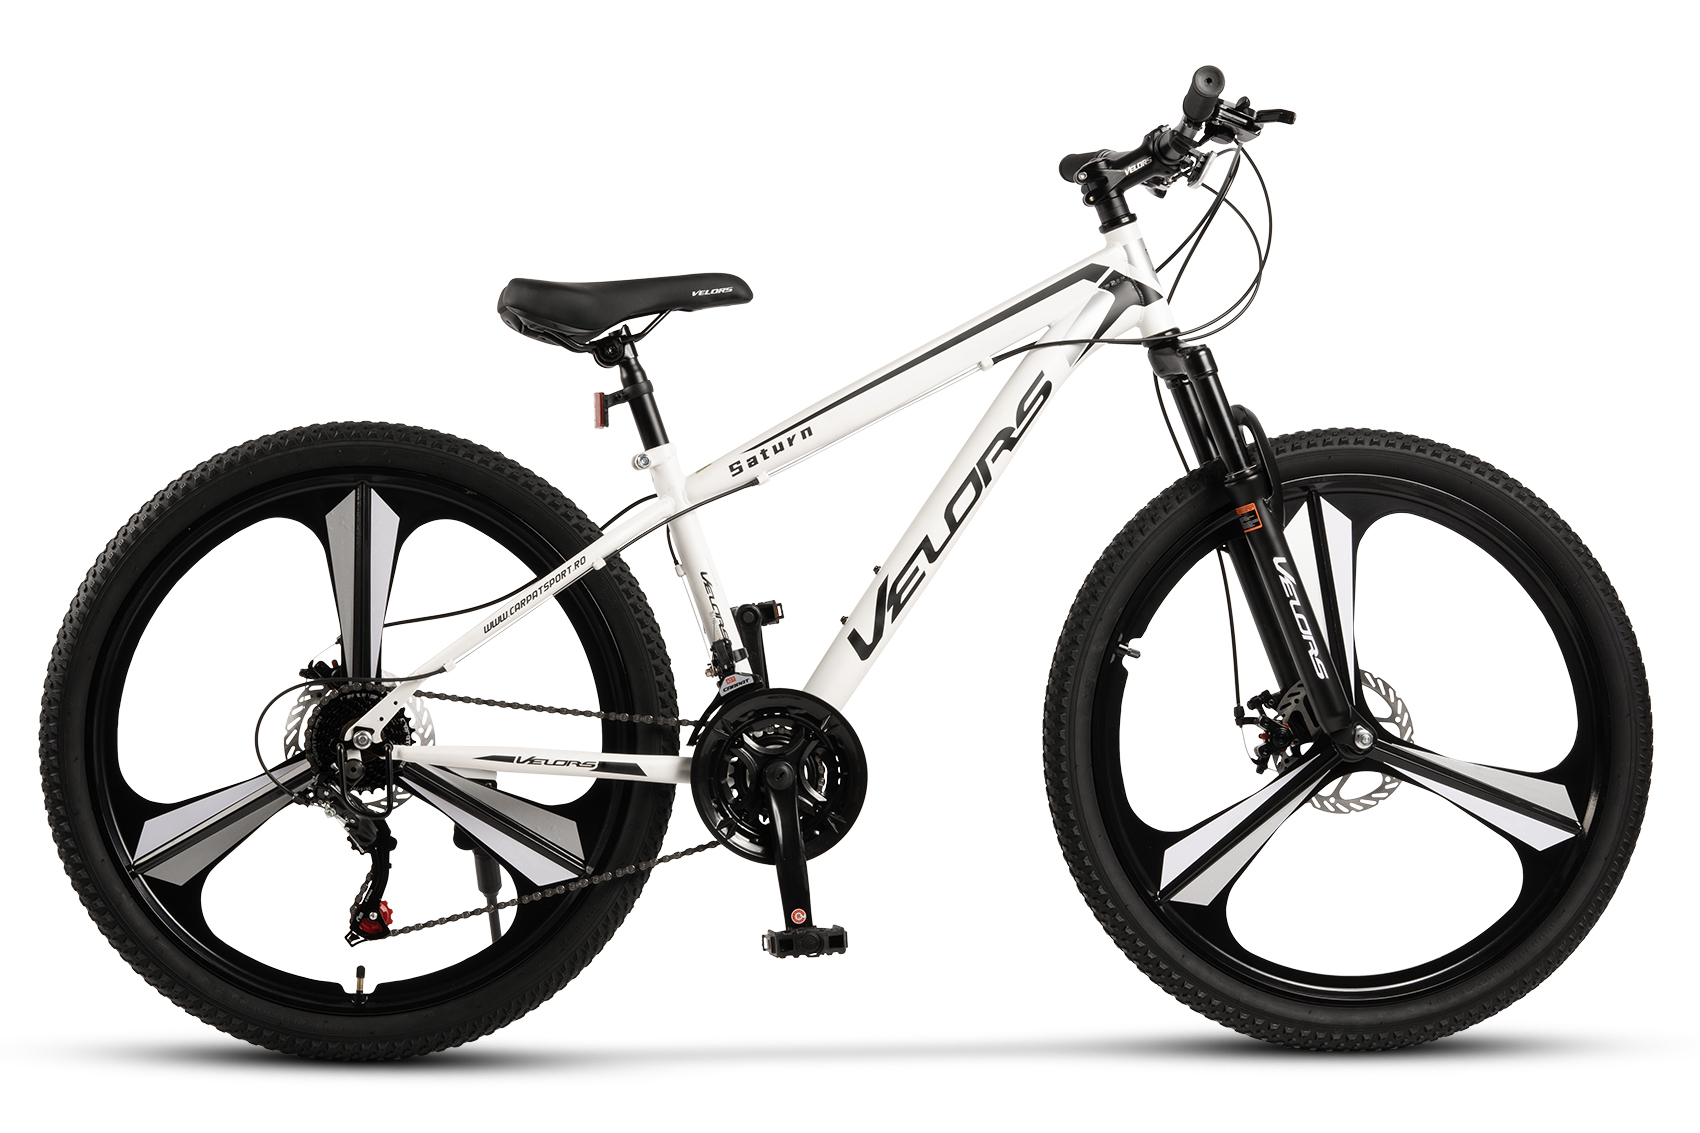 PROMO BICICLETE - ﻿﻿Bicicleta MTB Velors Saturn V2610MG 26", Alb/Negru, https:carpatsport.ro